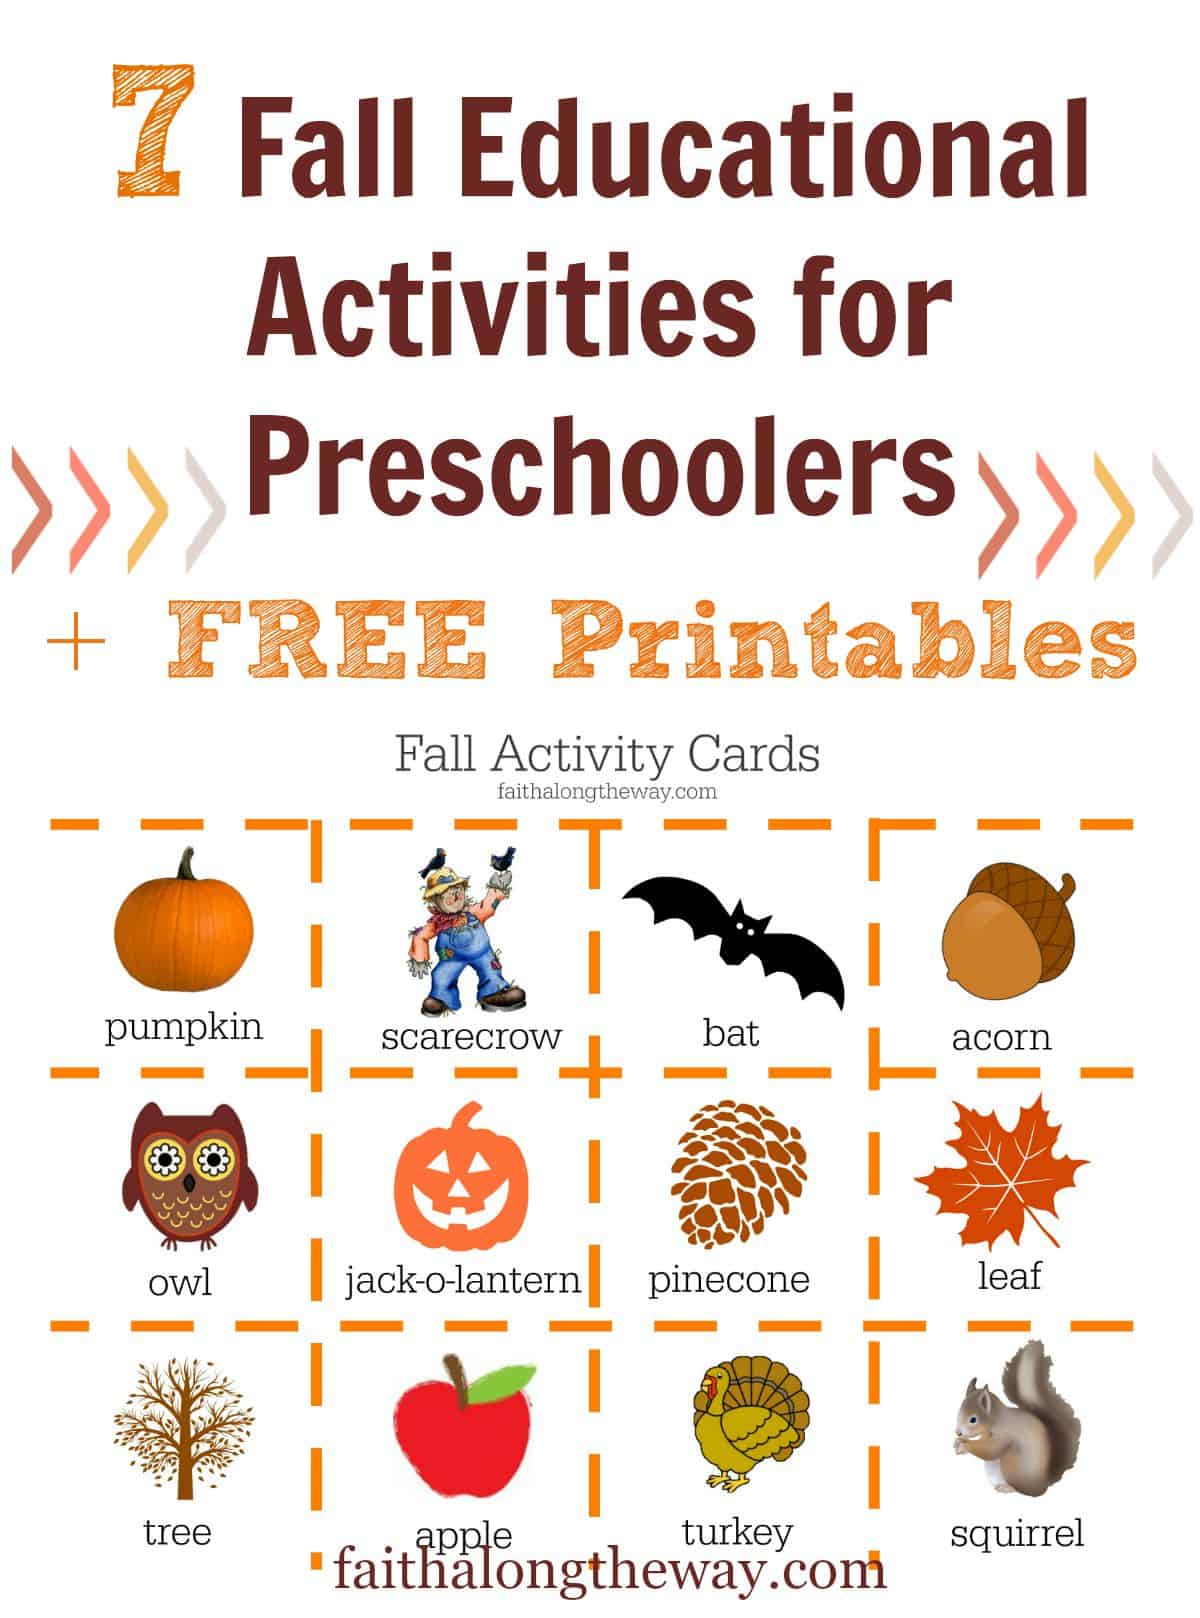 7 Fall Educational Activities for Preschoolers